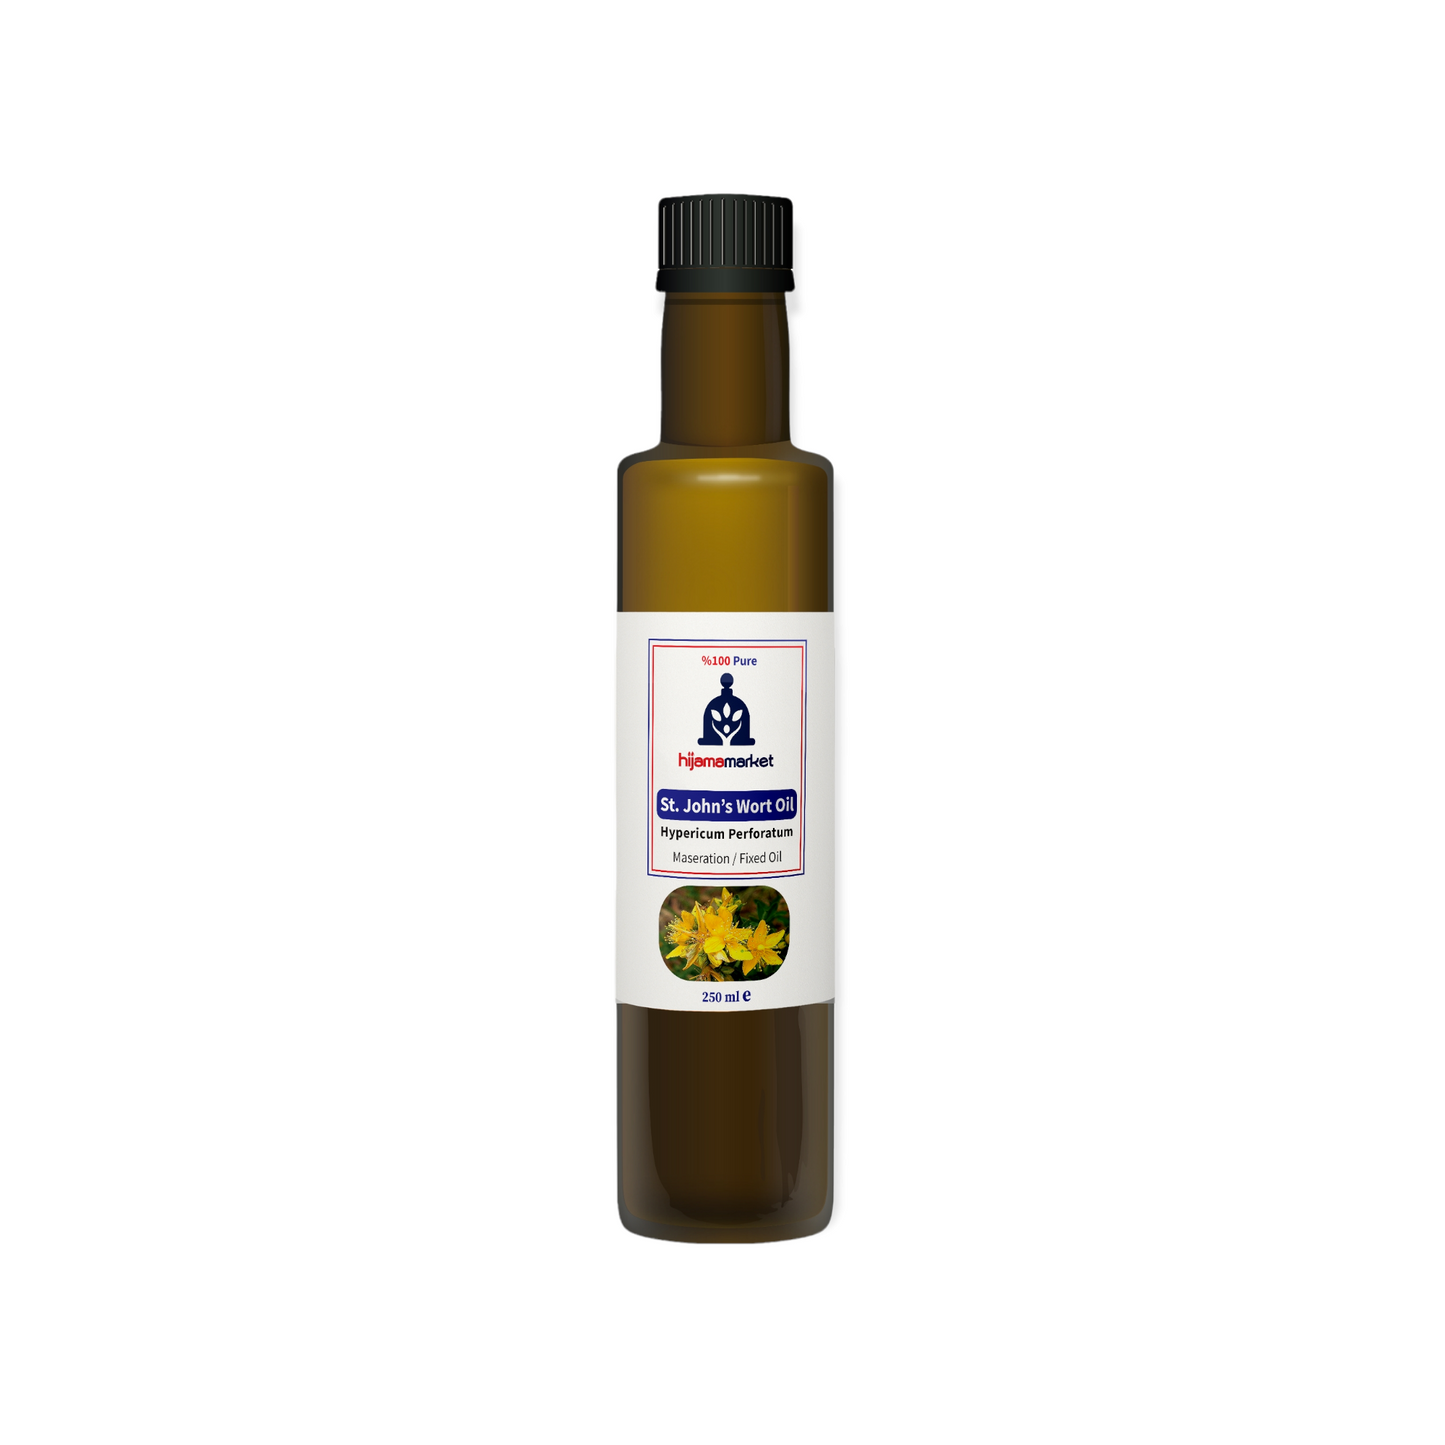 St John’s Worth Oil (Centaury Oil) Hypericum Perforatum %100 Pure - Maceration– 250ml